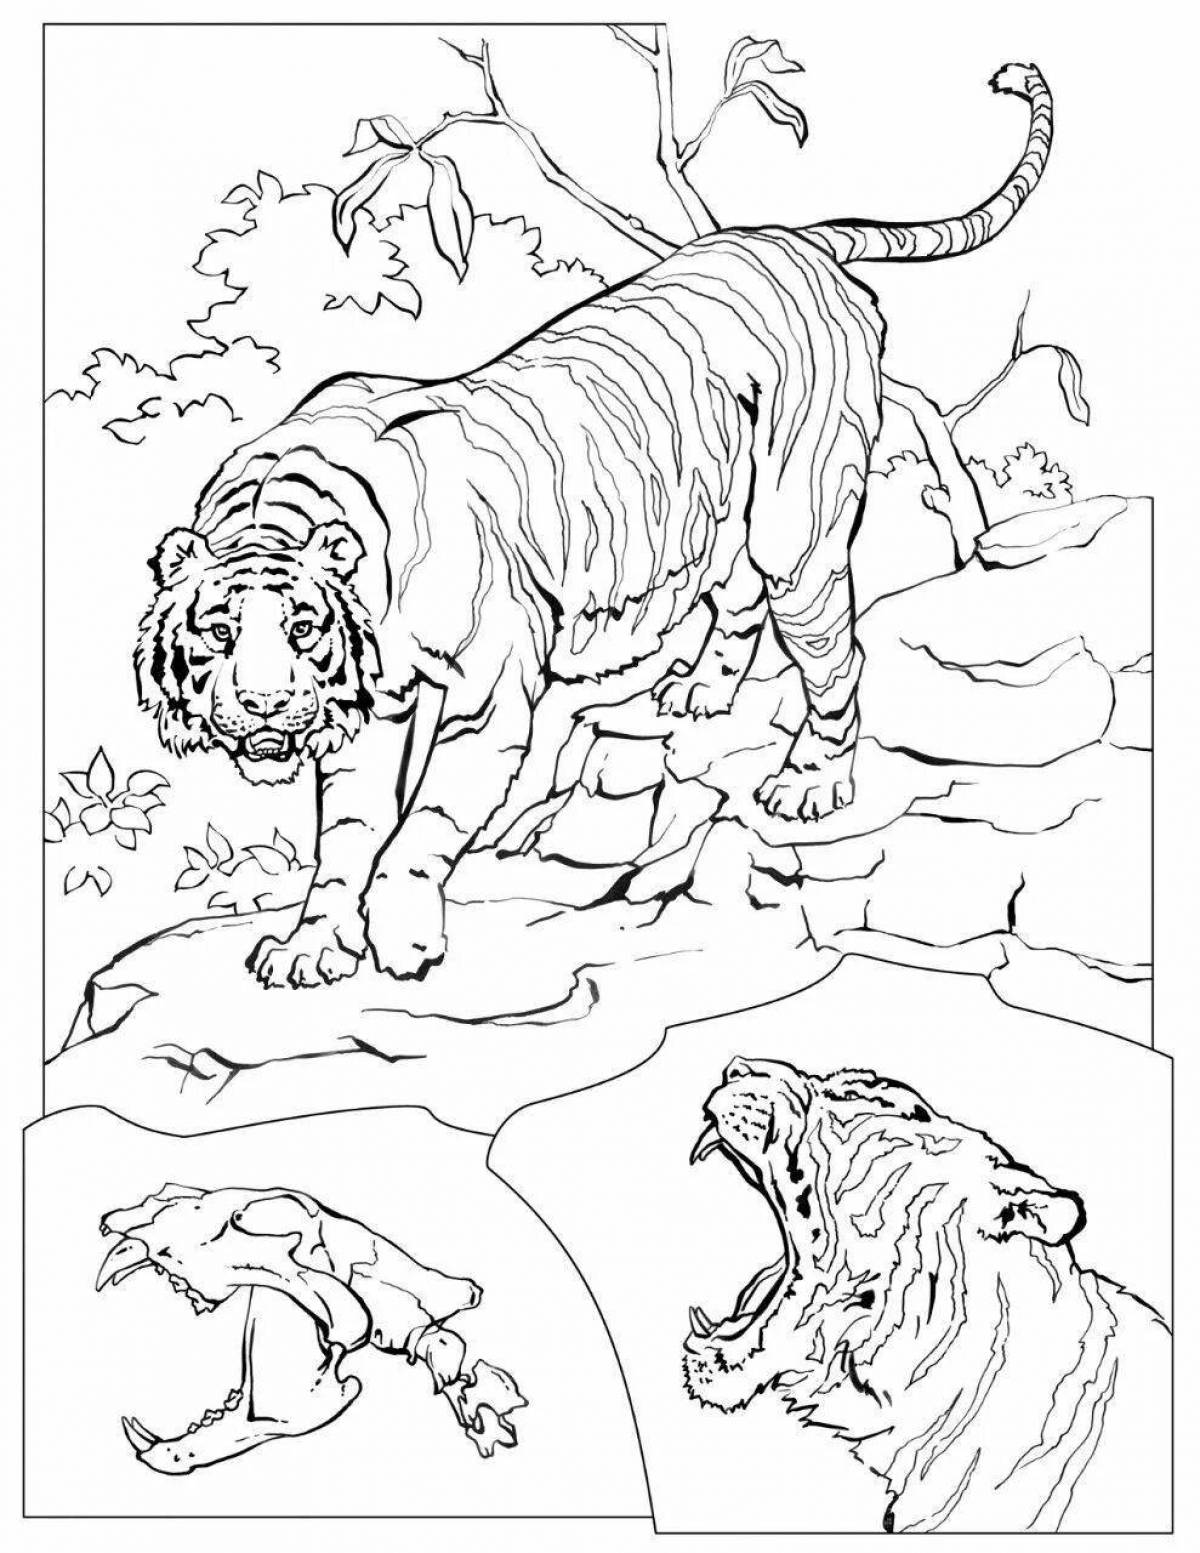 Amur tiger incredible coloring book